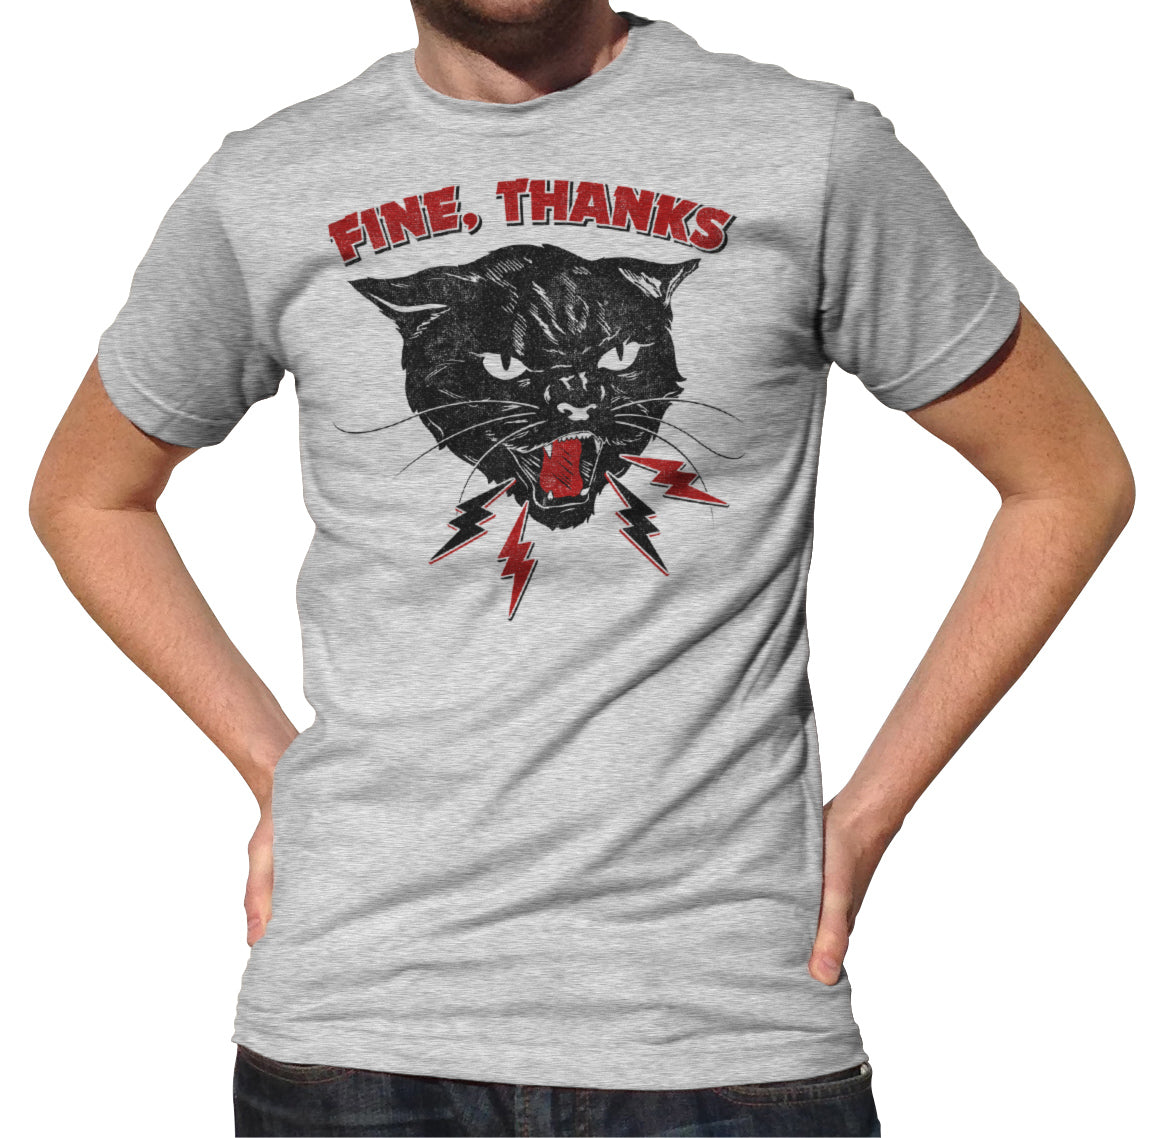 Men's Fine Thanks T-Shirt